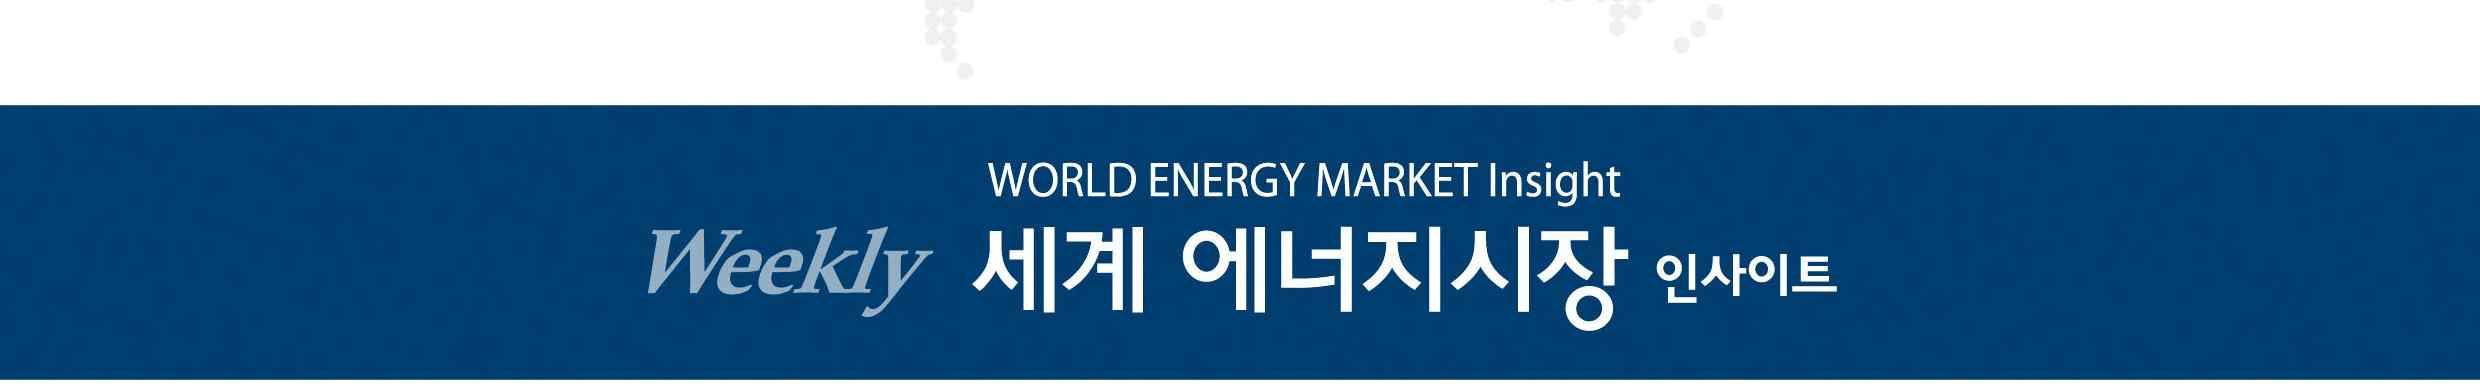 WORLD ENERGY MARKET Insight Weekly 주요